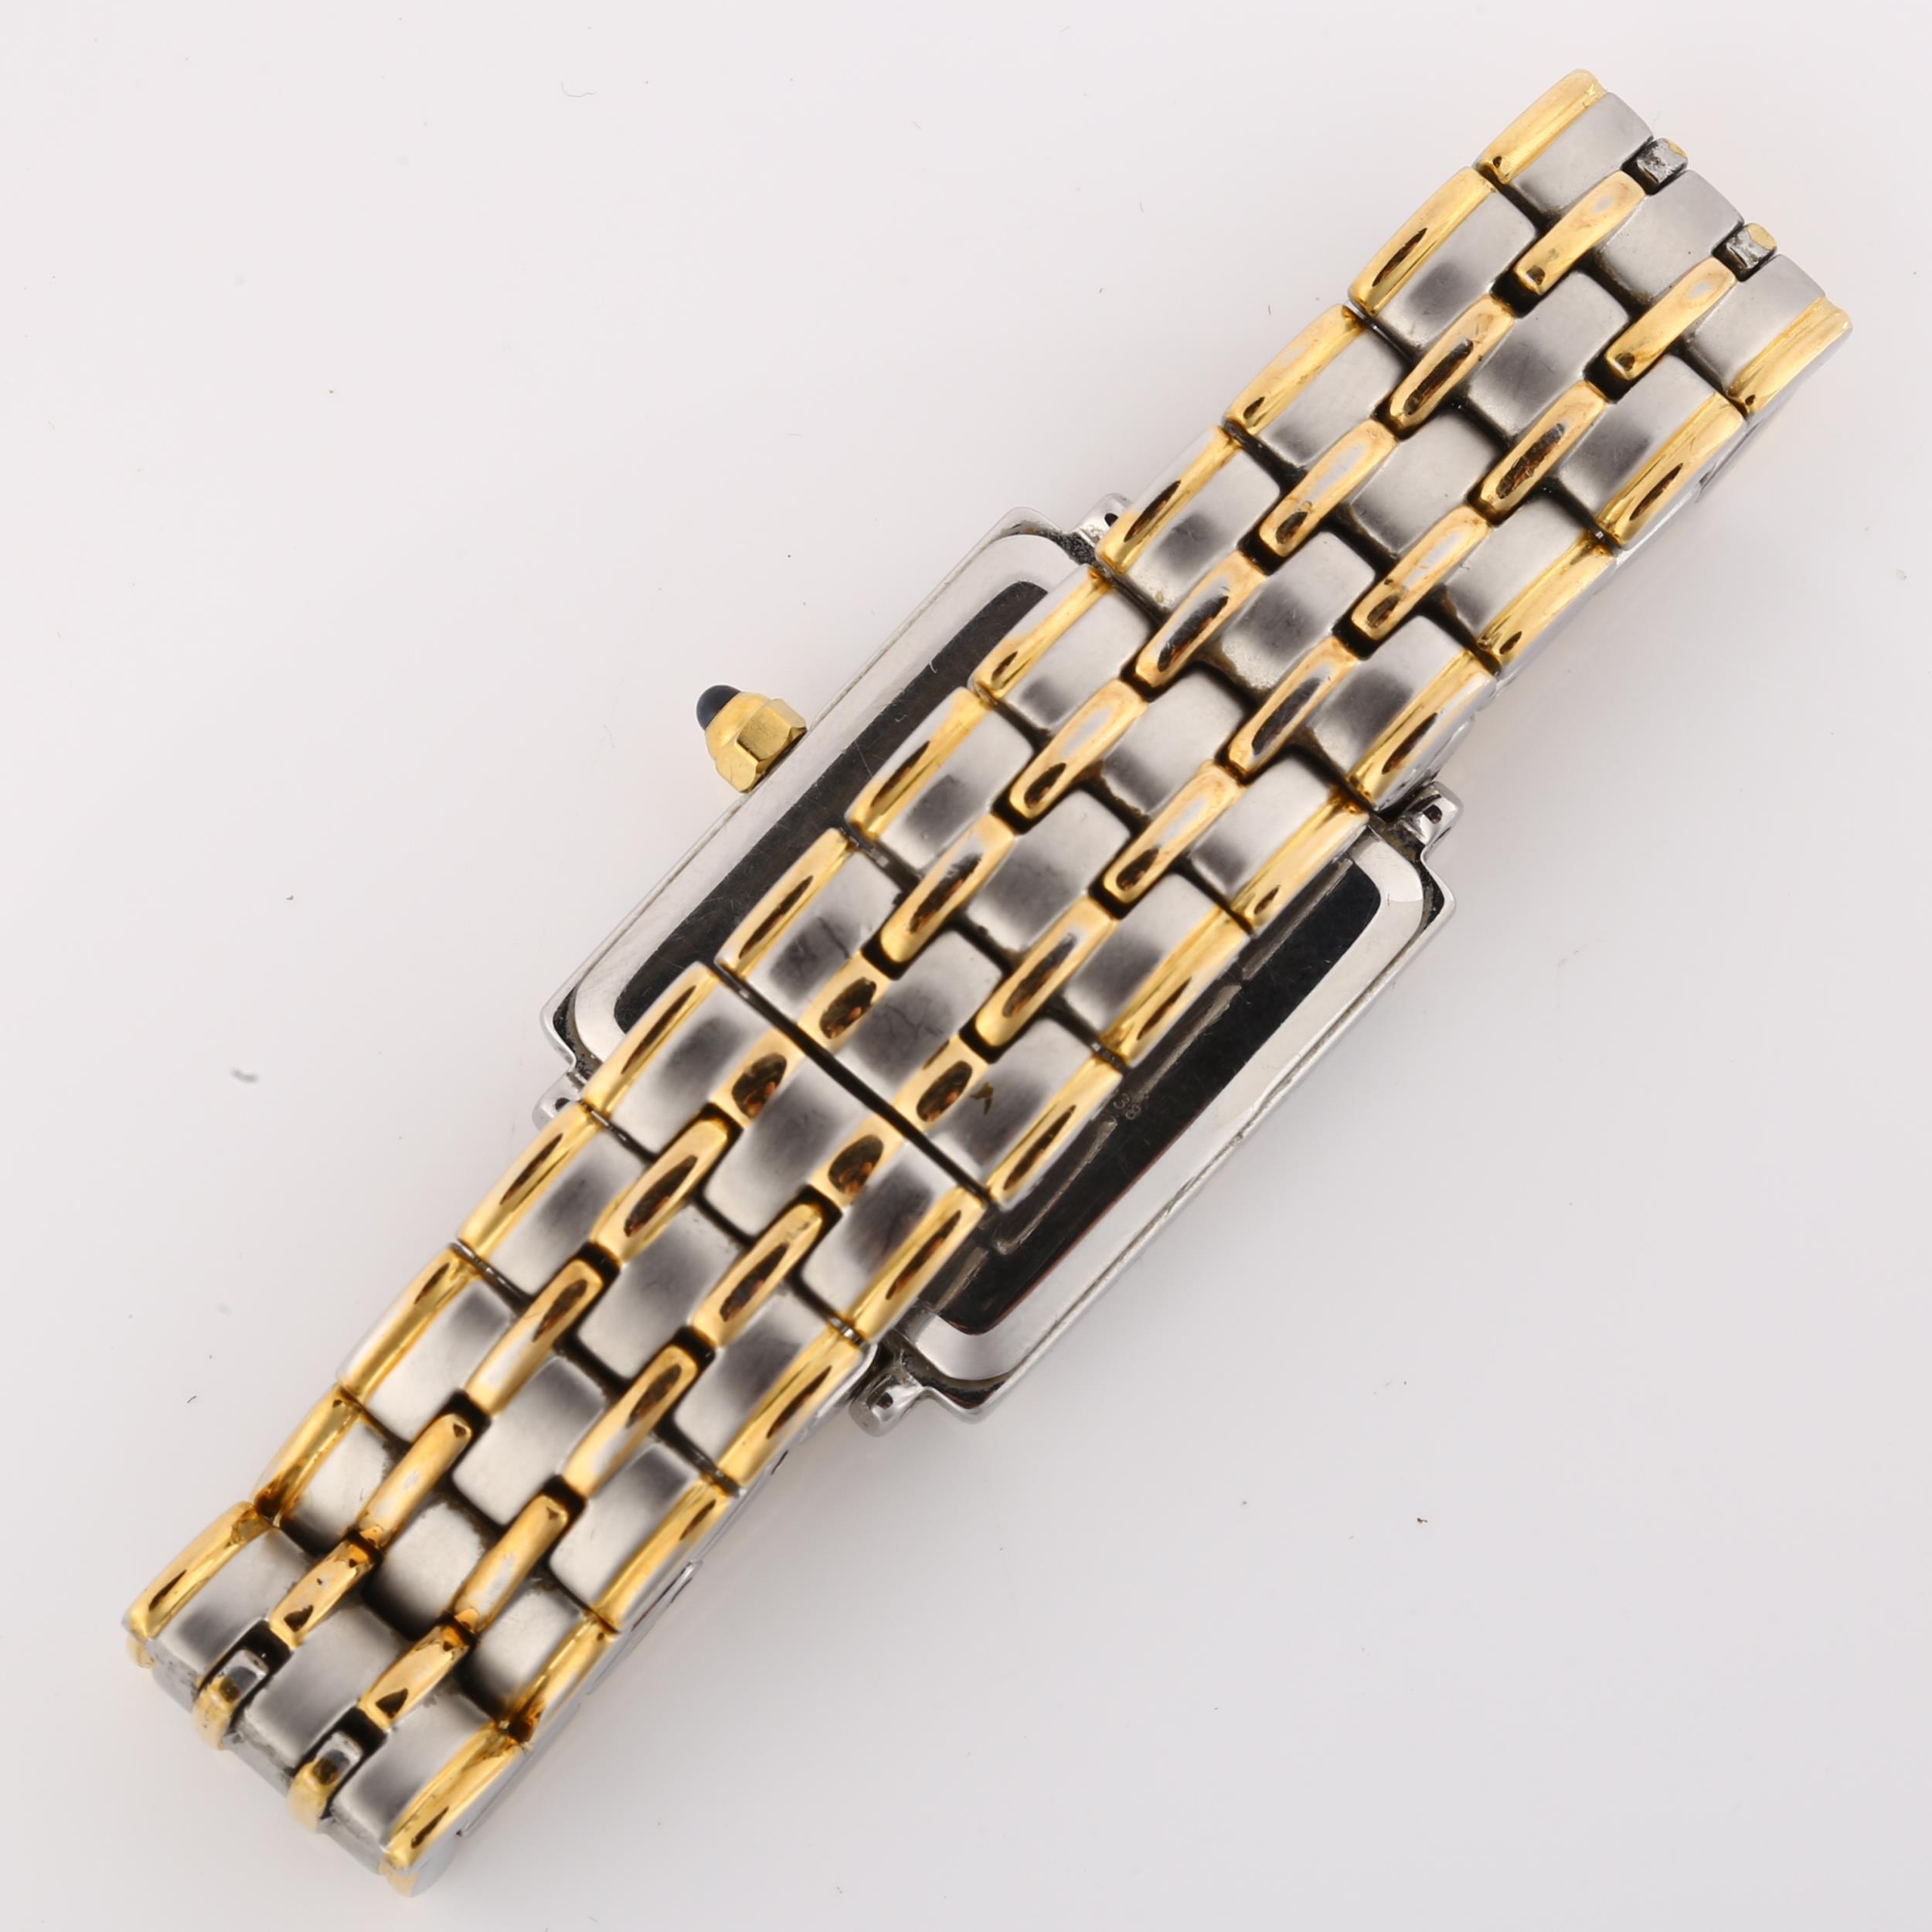 KLAUS-KOBEC - a lady's gold plated stainless steel Entrepreneur quartz bracelet watch, silvered dial - Image 3 of 5